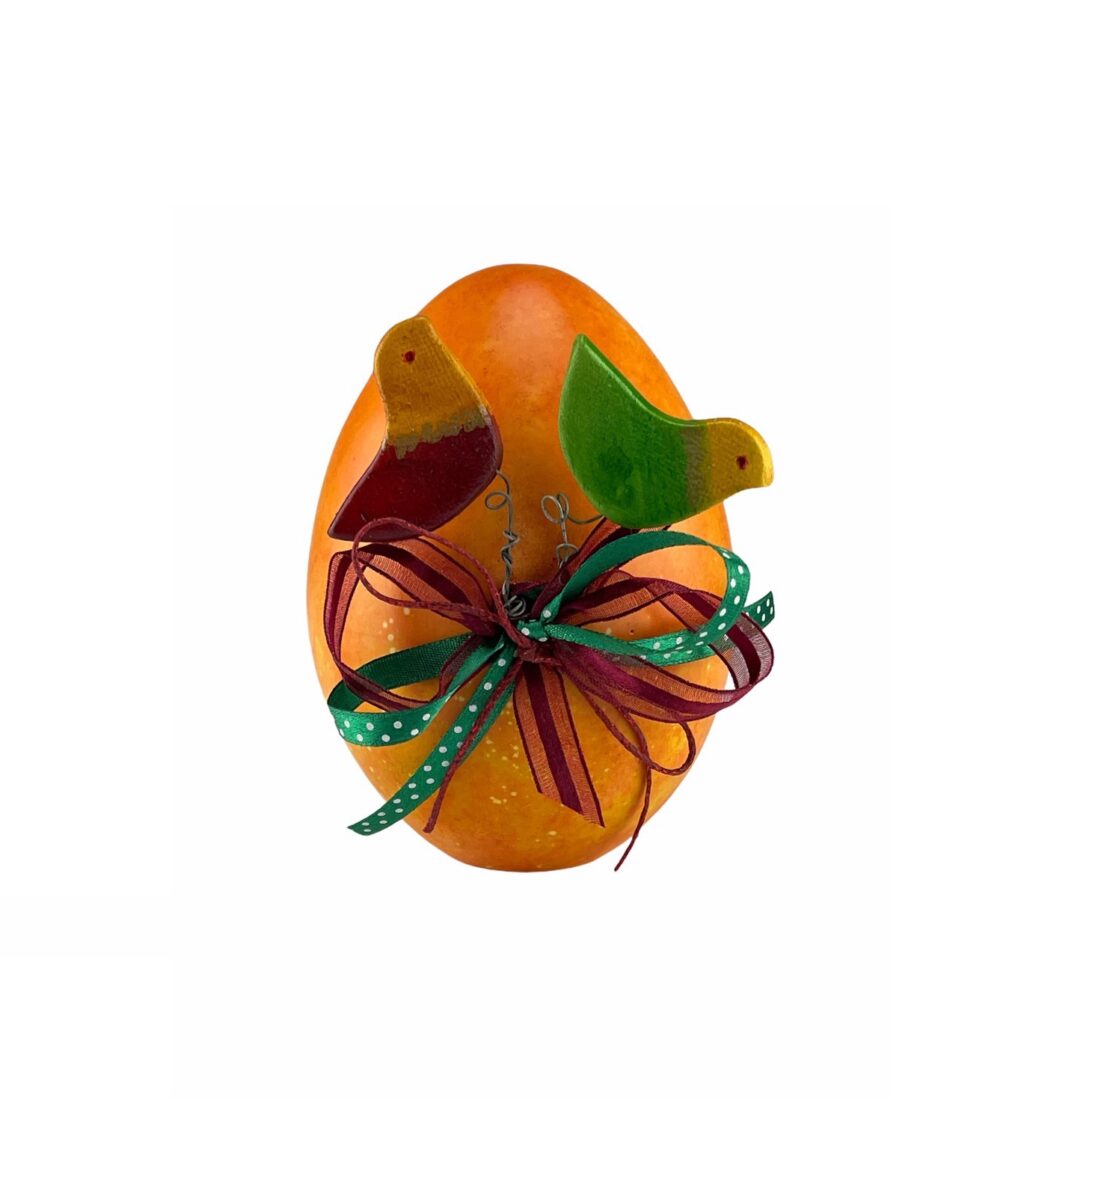 Ceramic Easter orange egg with birds